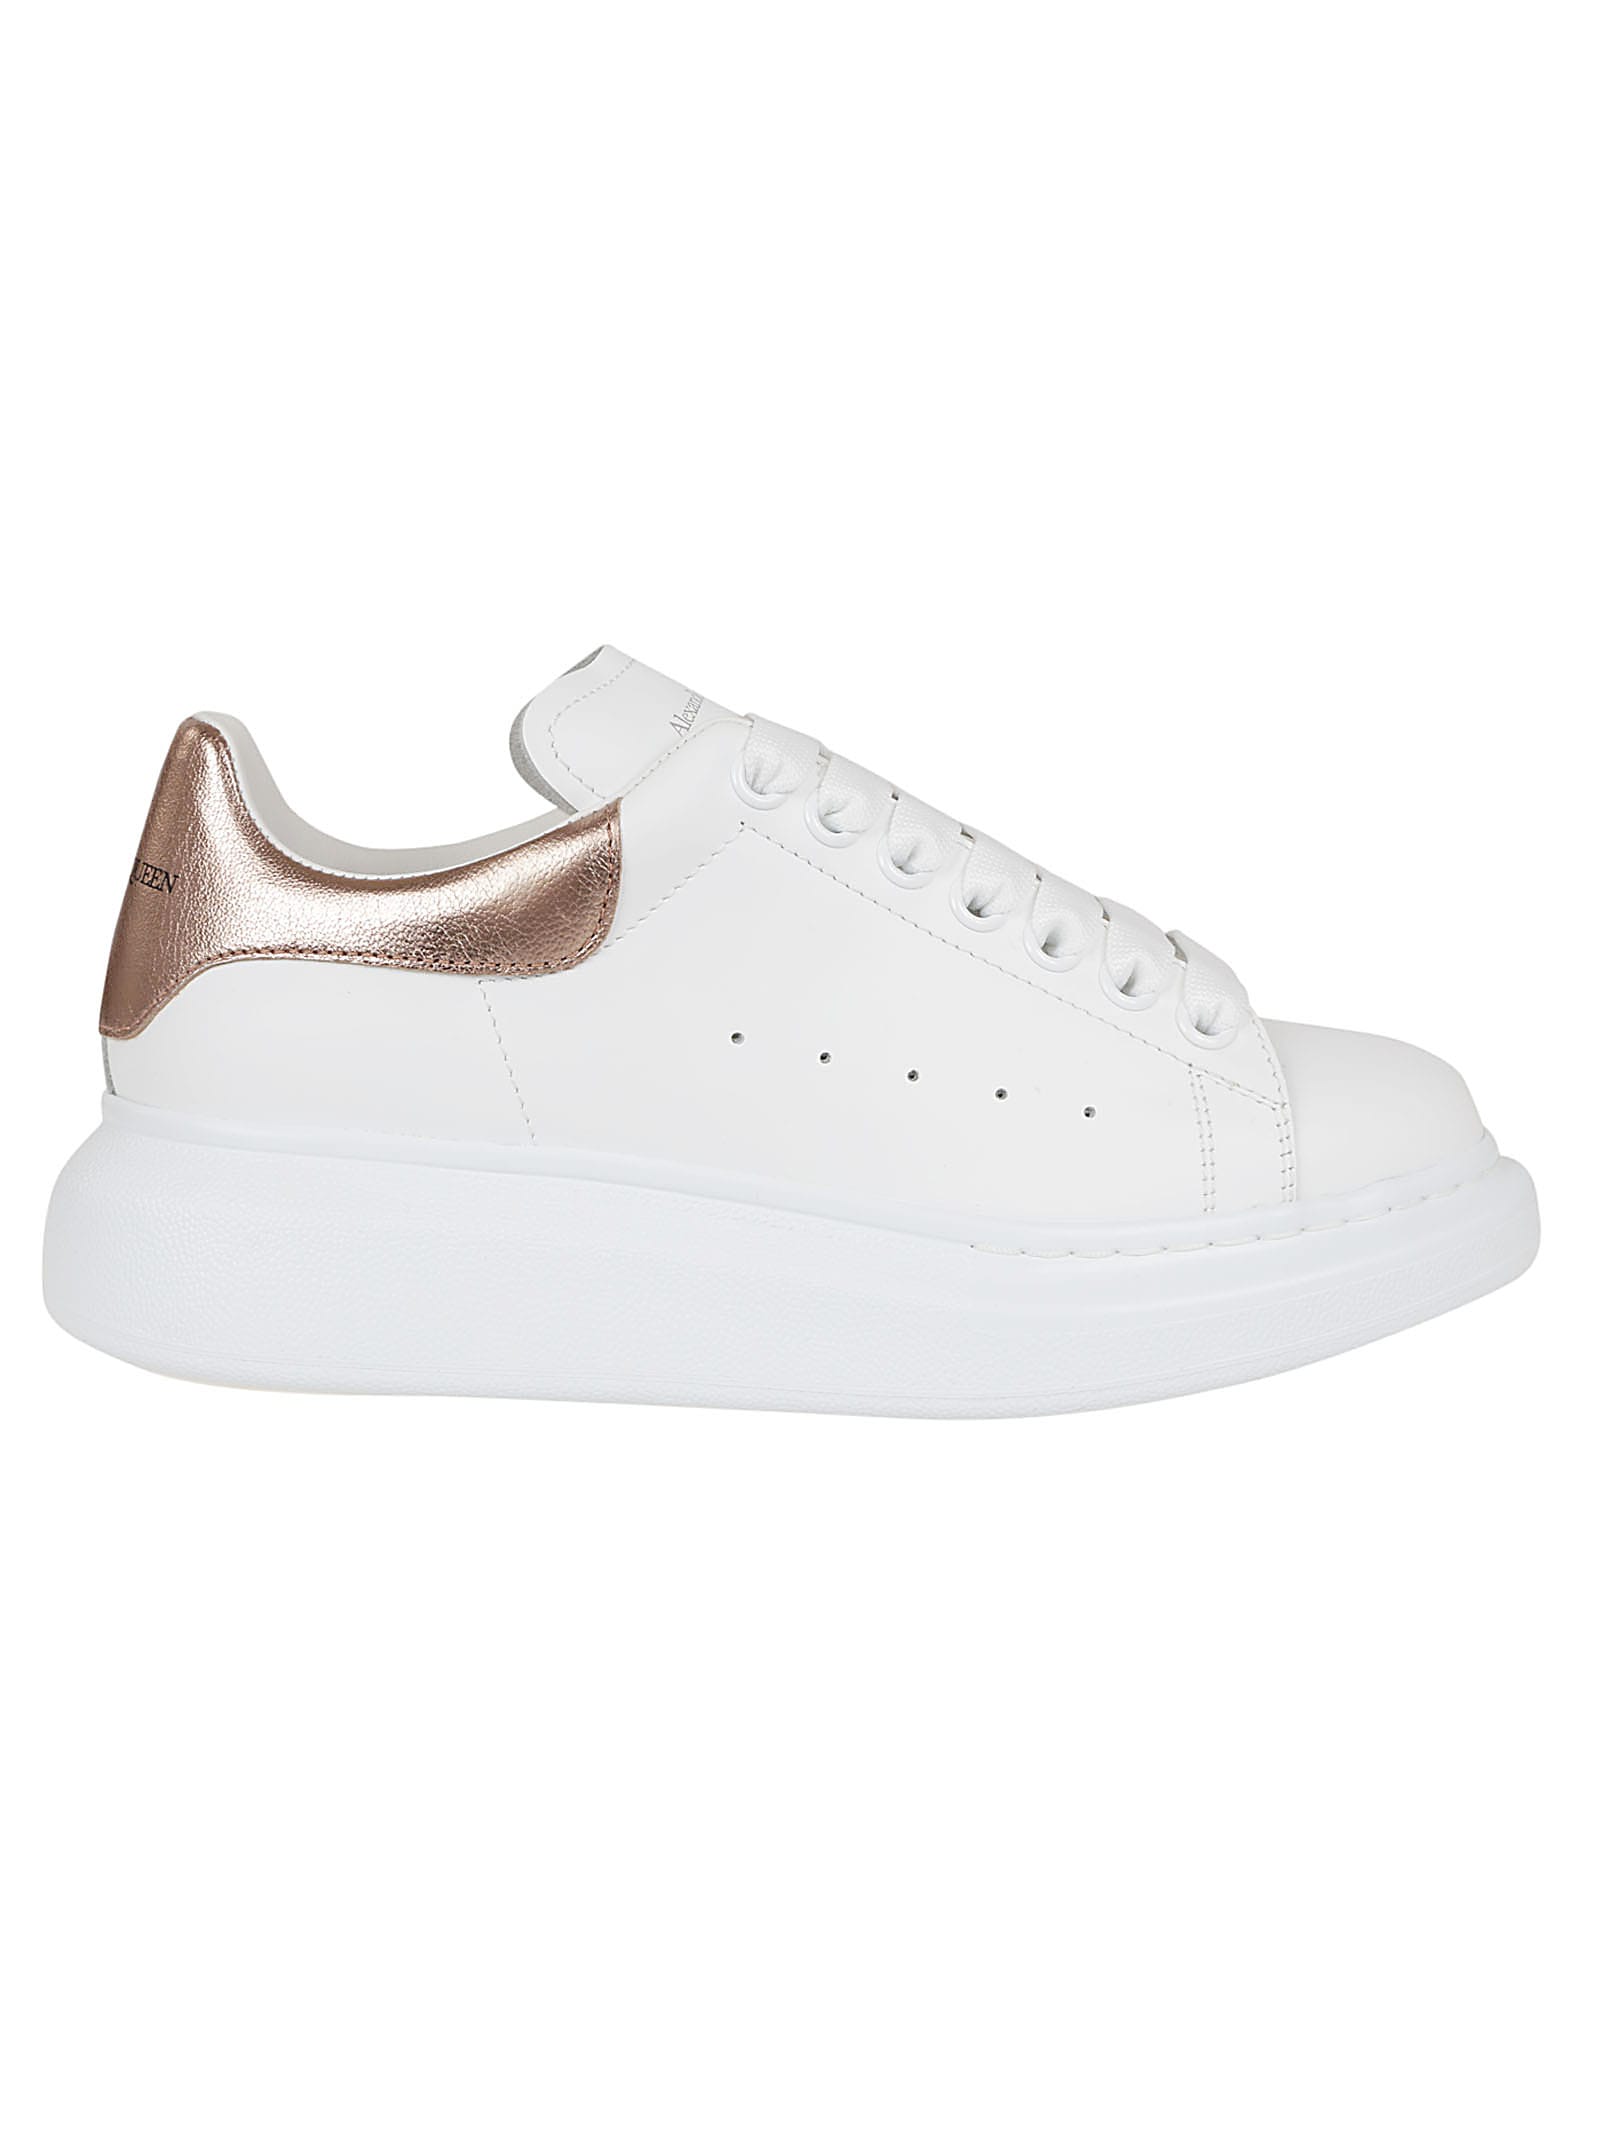 Shop Alexander Mcqueen Sneaker Pelle In White/rose Gold 171